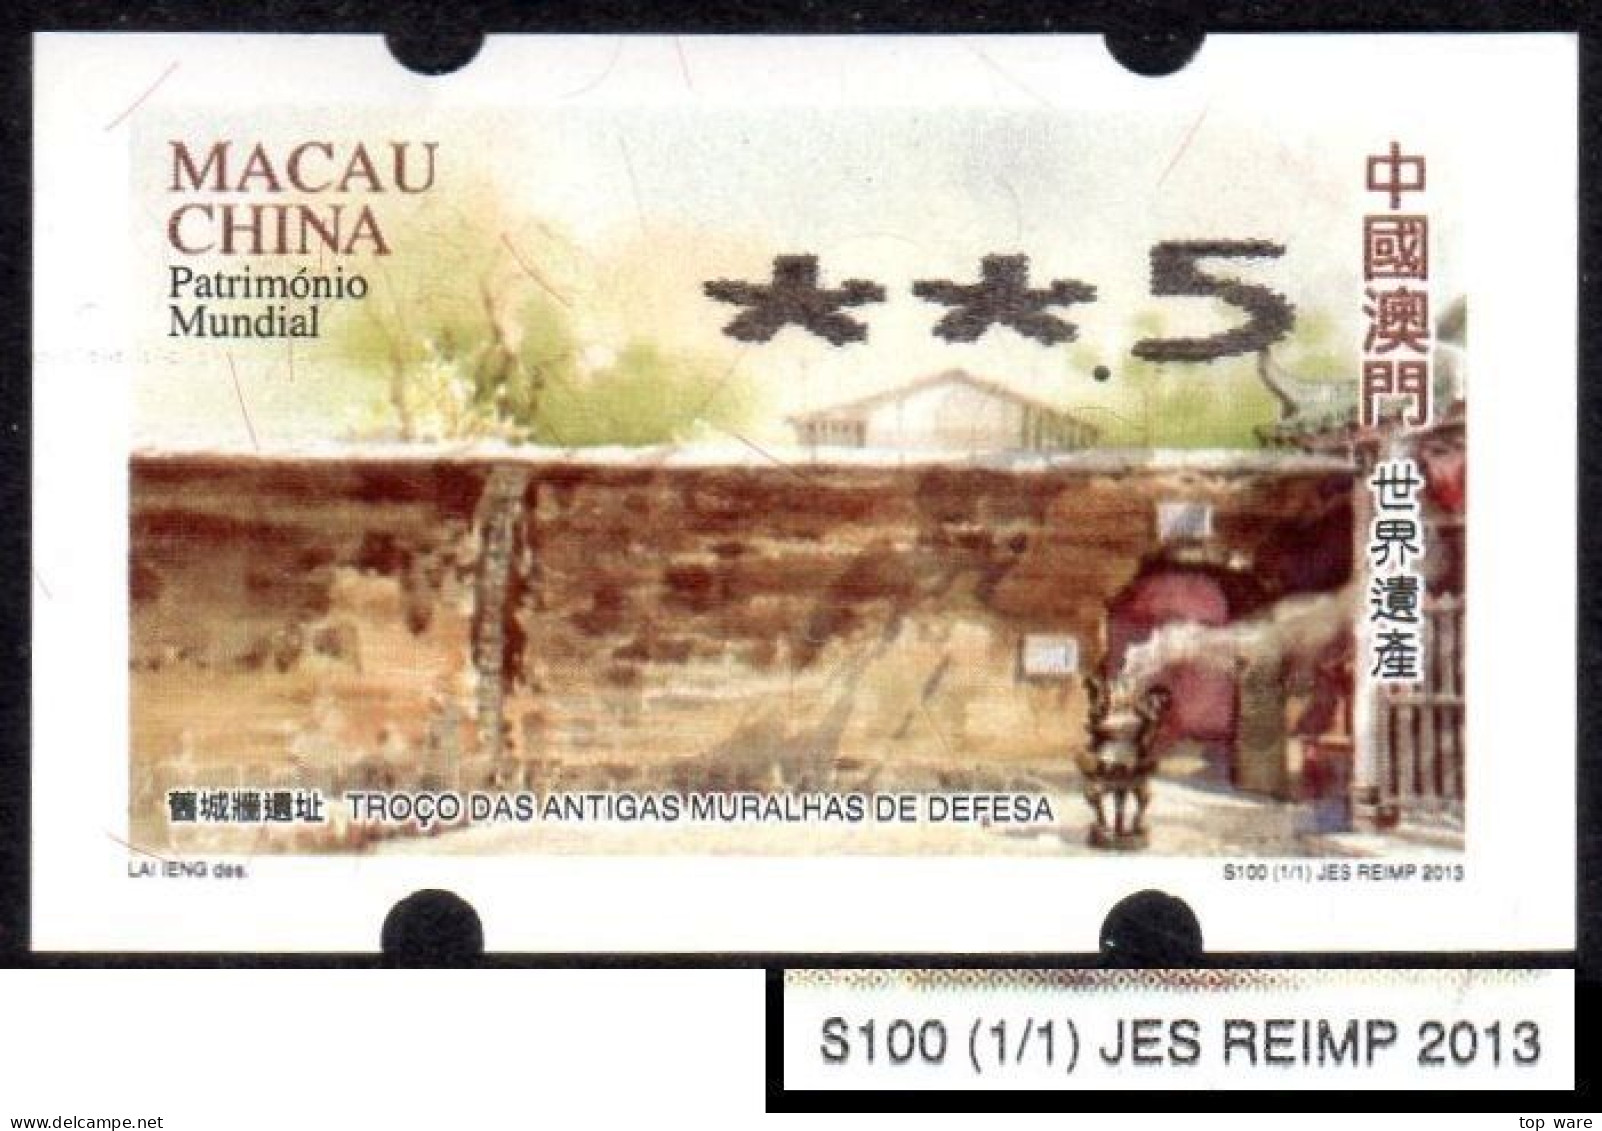 2013 China Macau ATM Stamps World Heritage / MNH / Nagler Automatenmarken Etiquetas Automatici Distributeur - Distributori